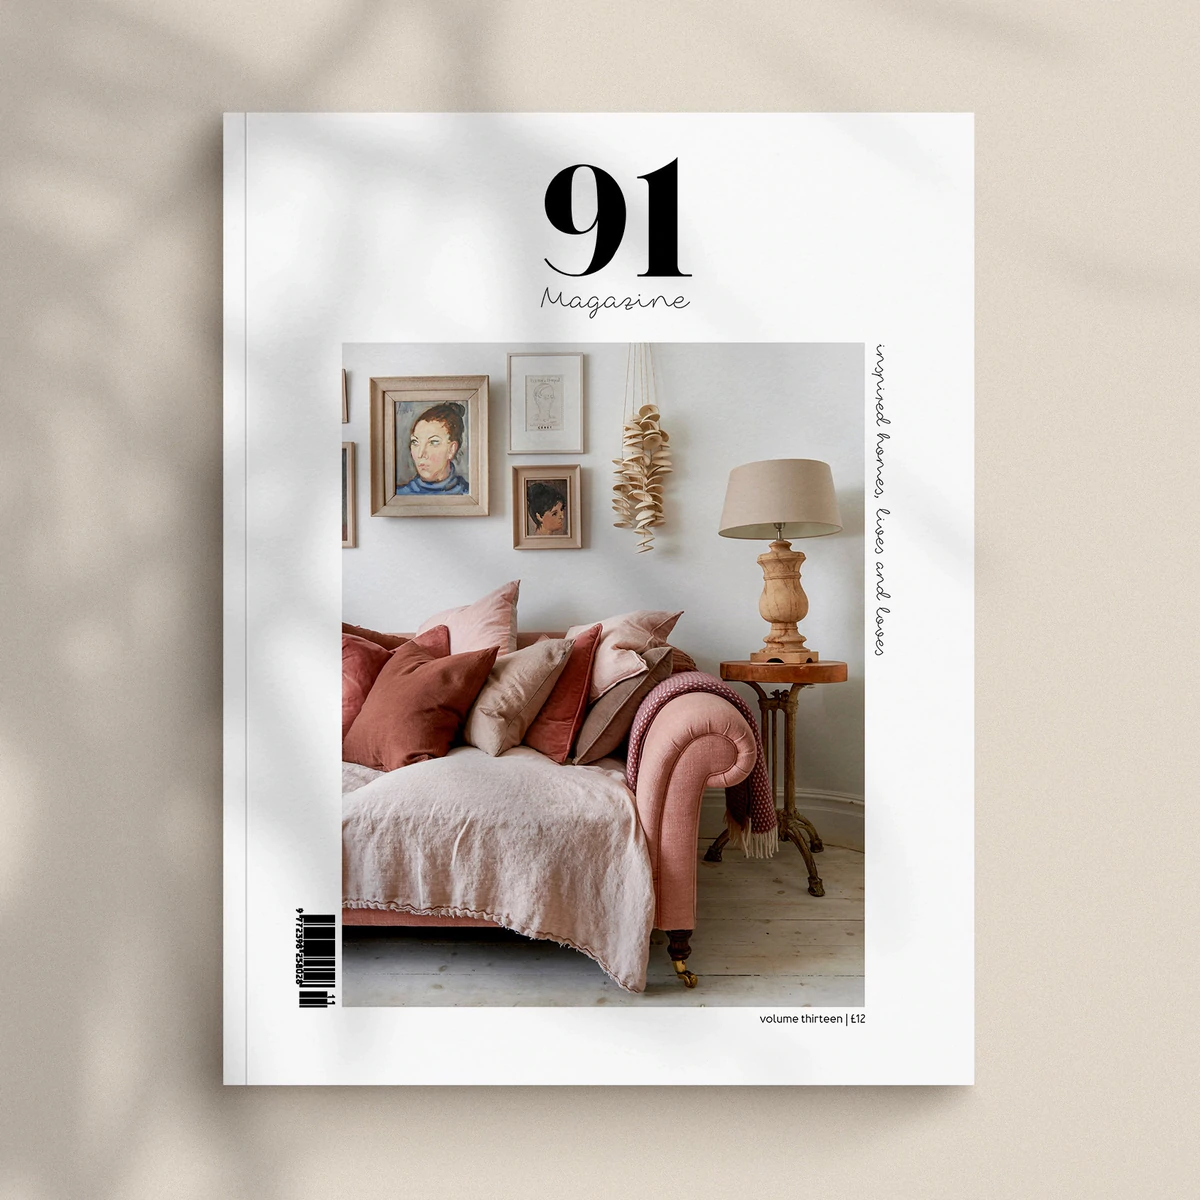 91 Magazine - Vol.13